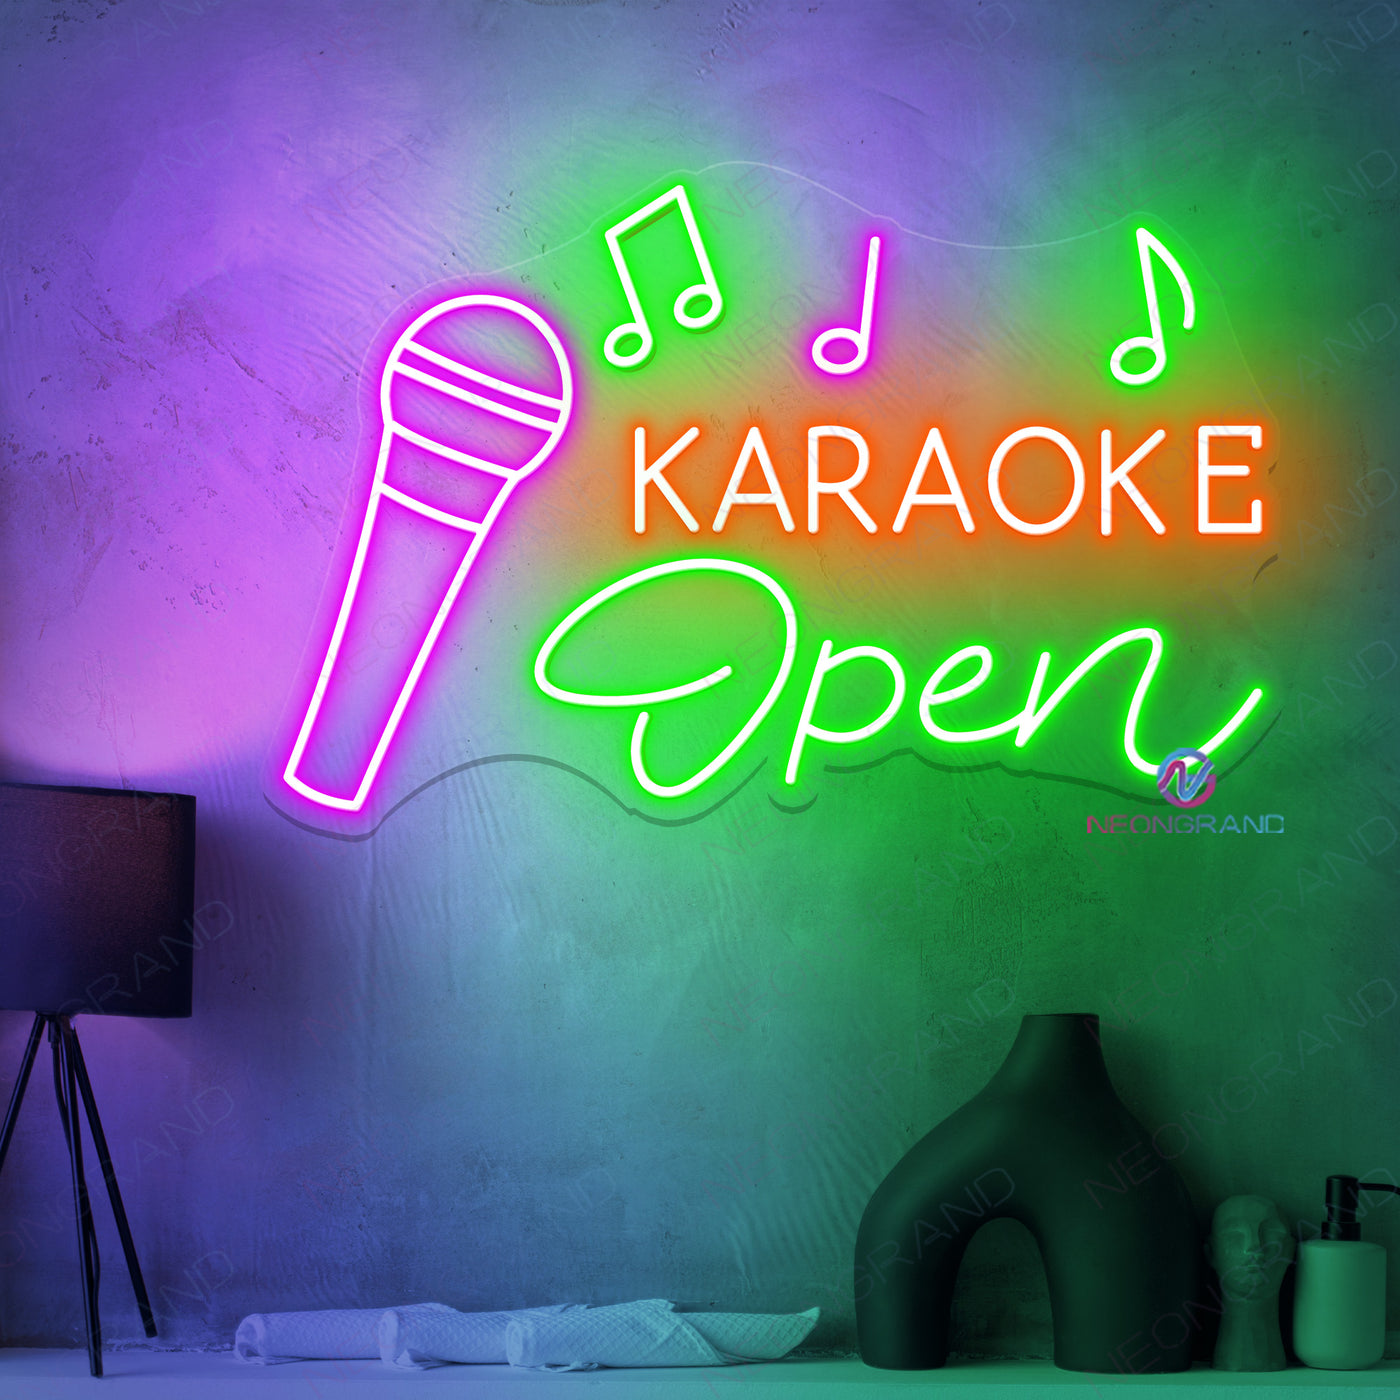 Karaoke Open Neon Sign Party Led Light